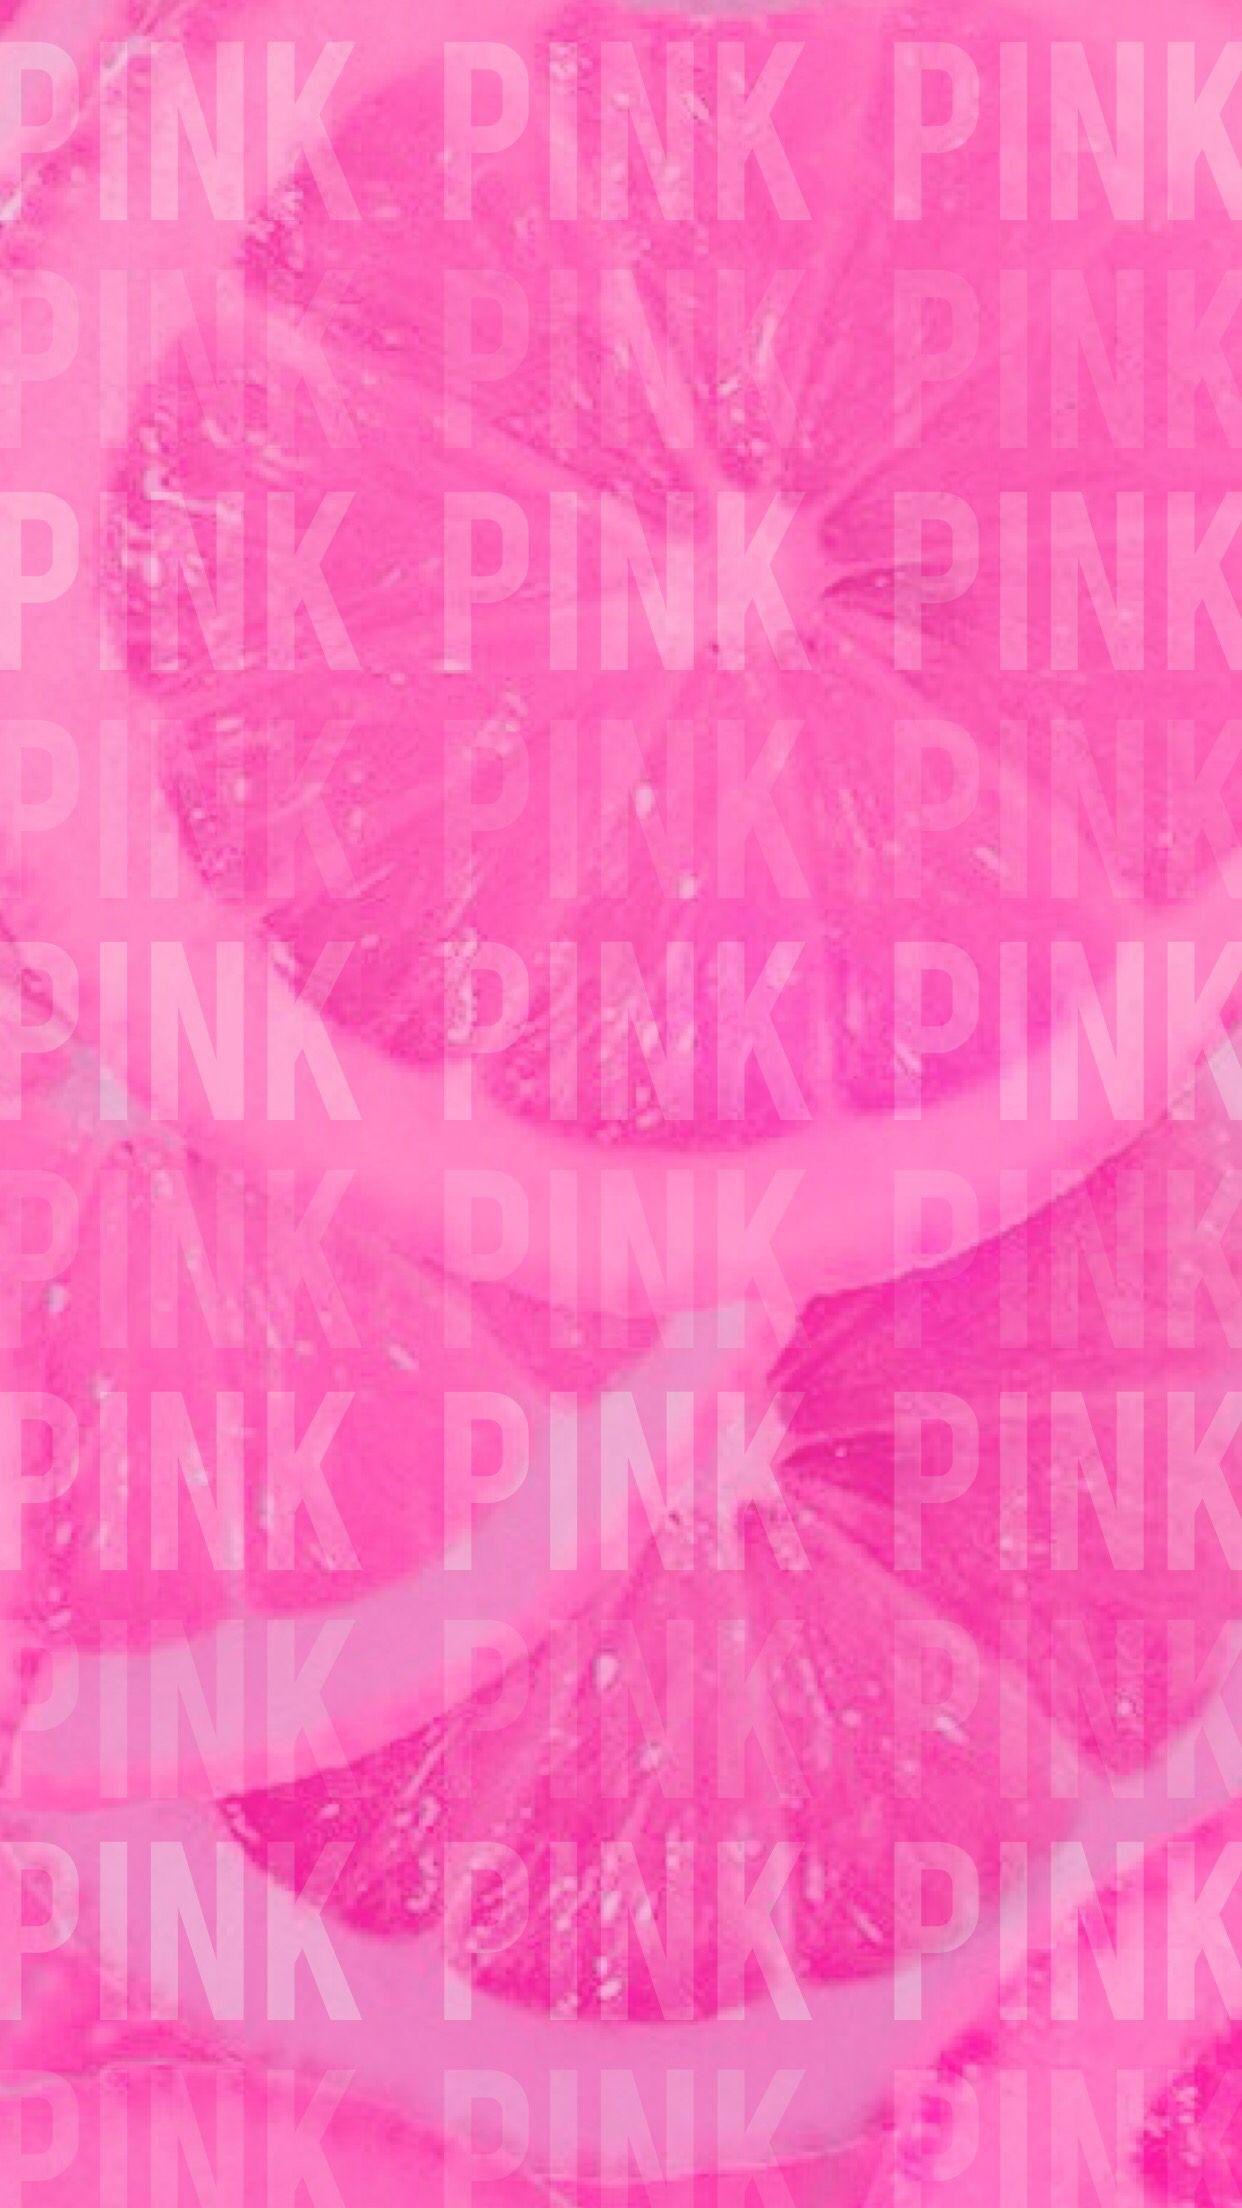 VS, Victoria's Secret, Pink, wallpaper, iPhone, background, fruit